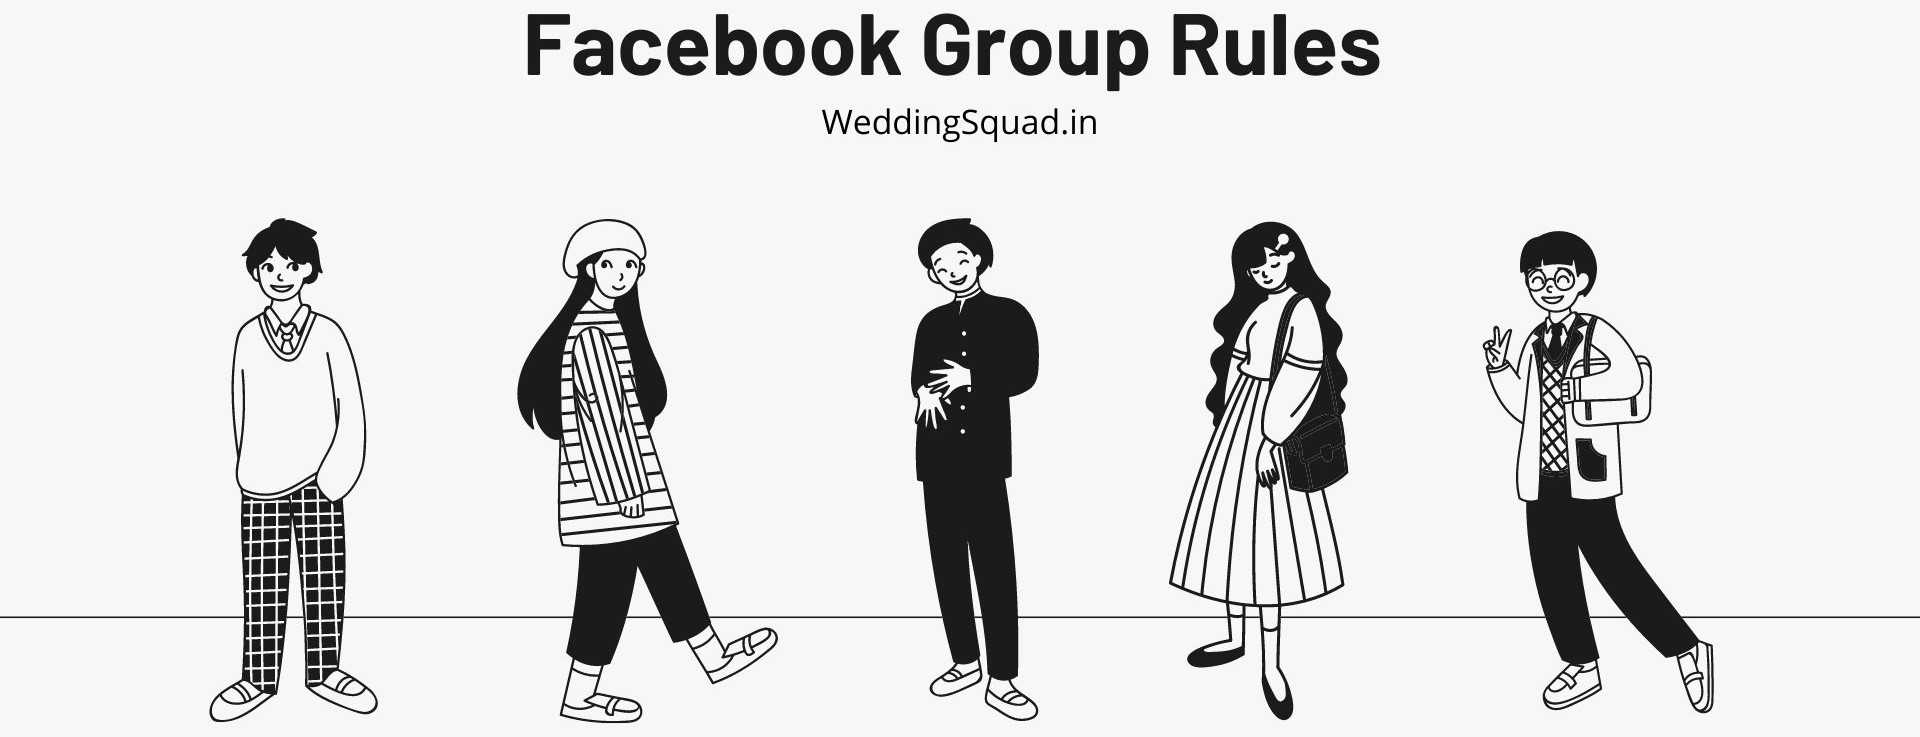 Facebook Group Vendor Rules - 1